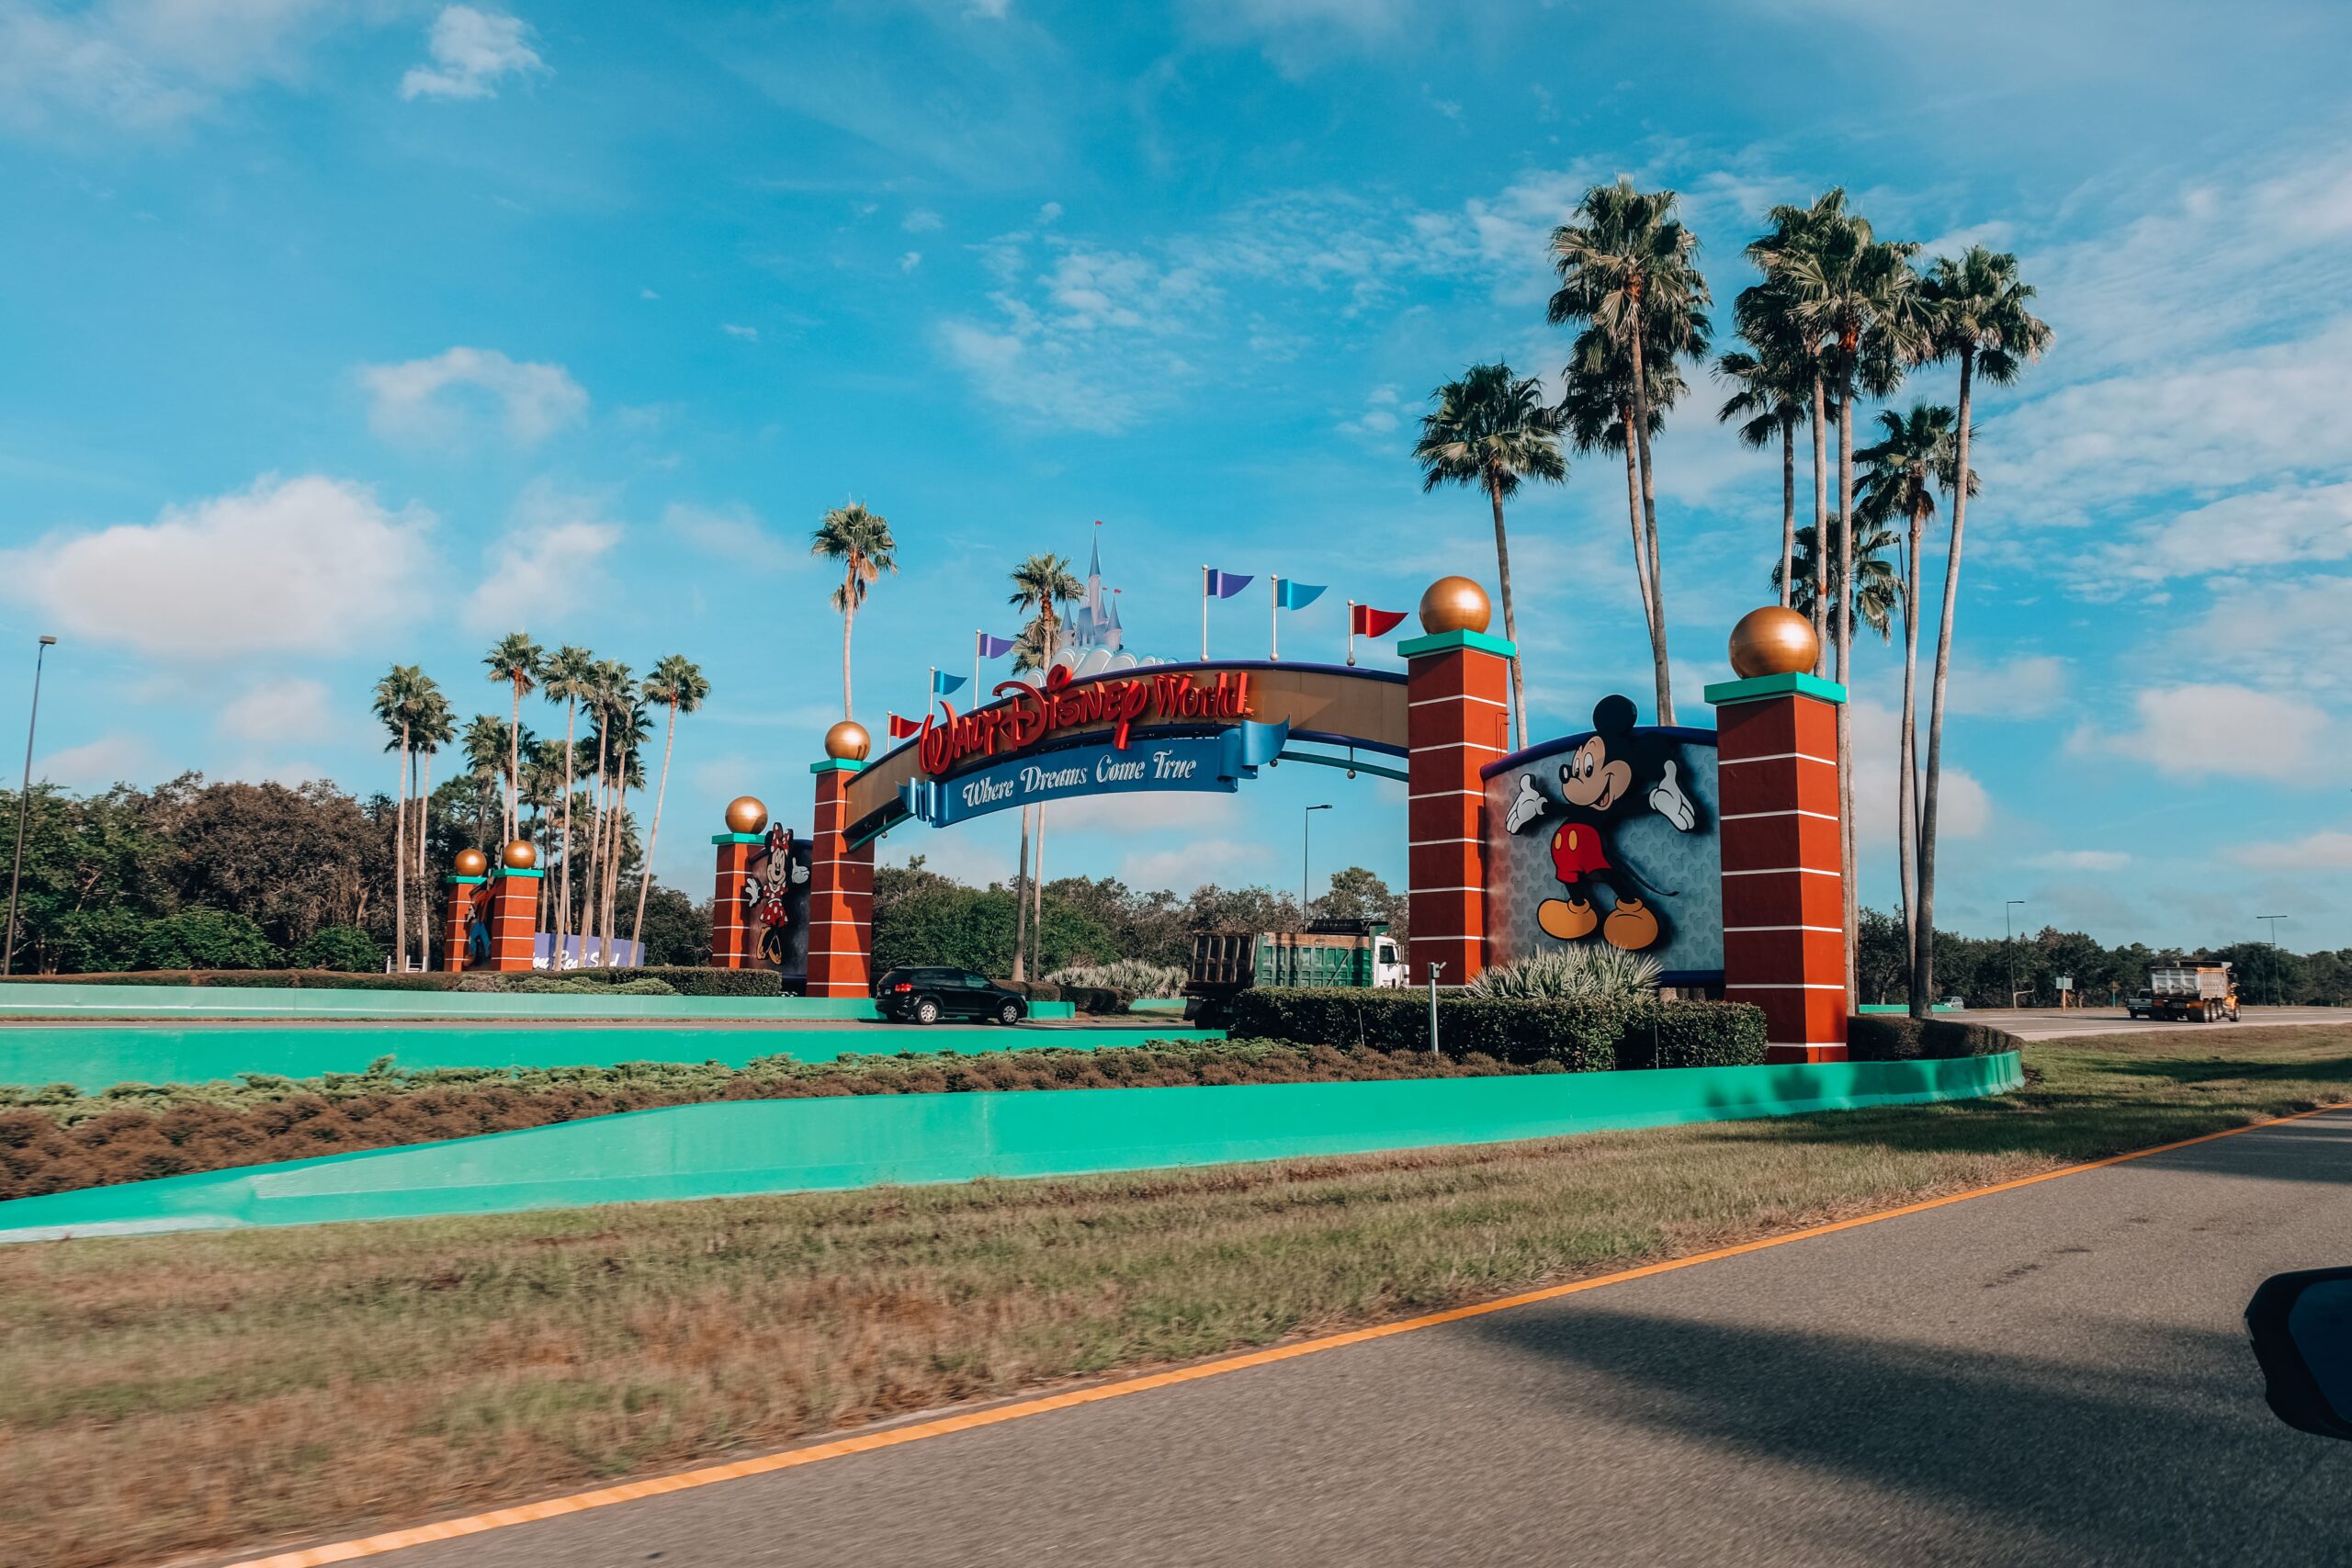 The entrance to Walt Disney World by car. Disney Hotels or International Drive 